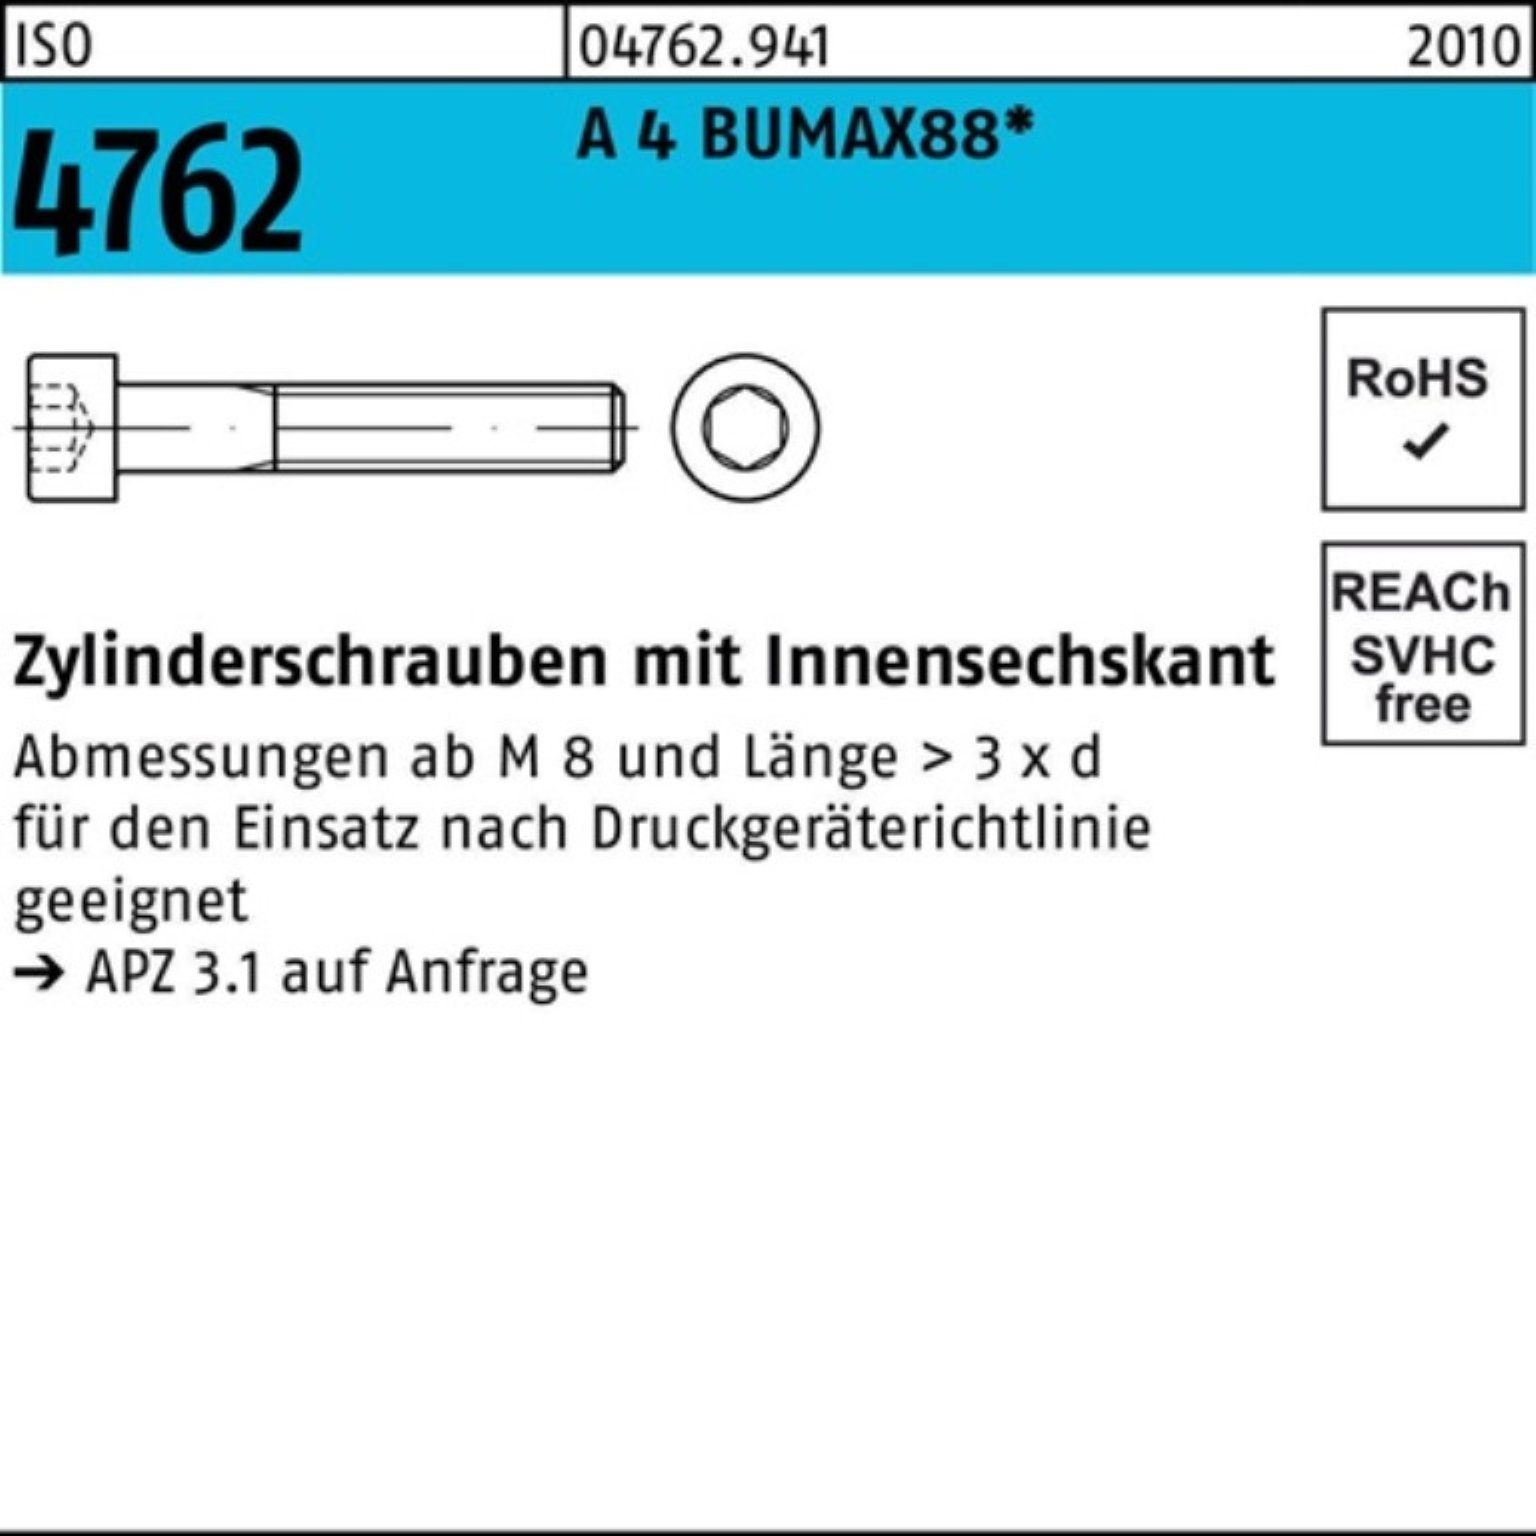 Pack S Innen-6kt 4762 ISO Bufab A 100er 4 35 Zylinderschraube M8x BUMAX88 Zylinderschraube 50